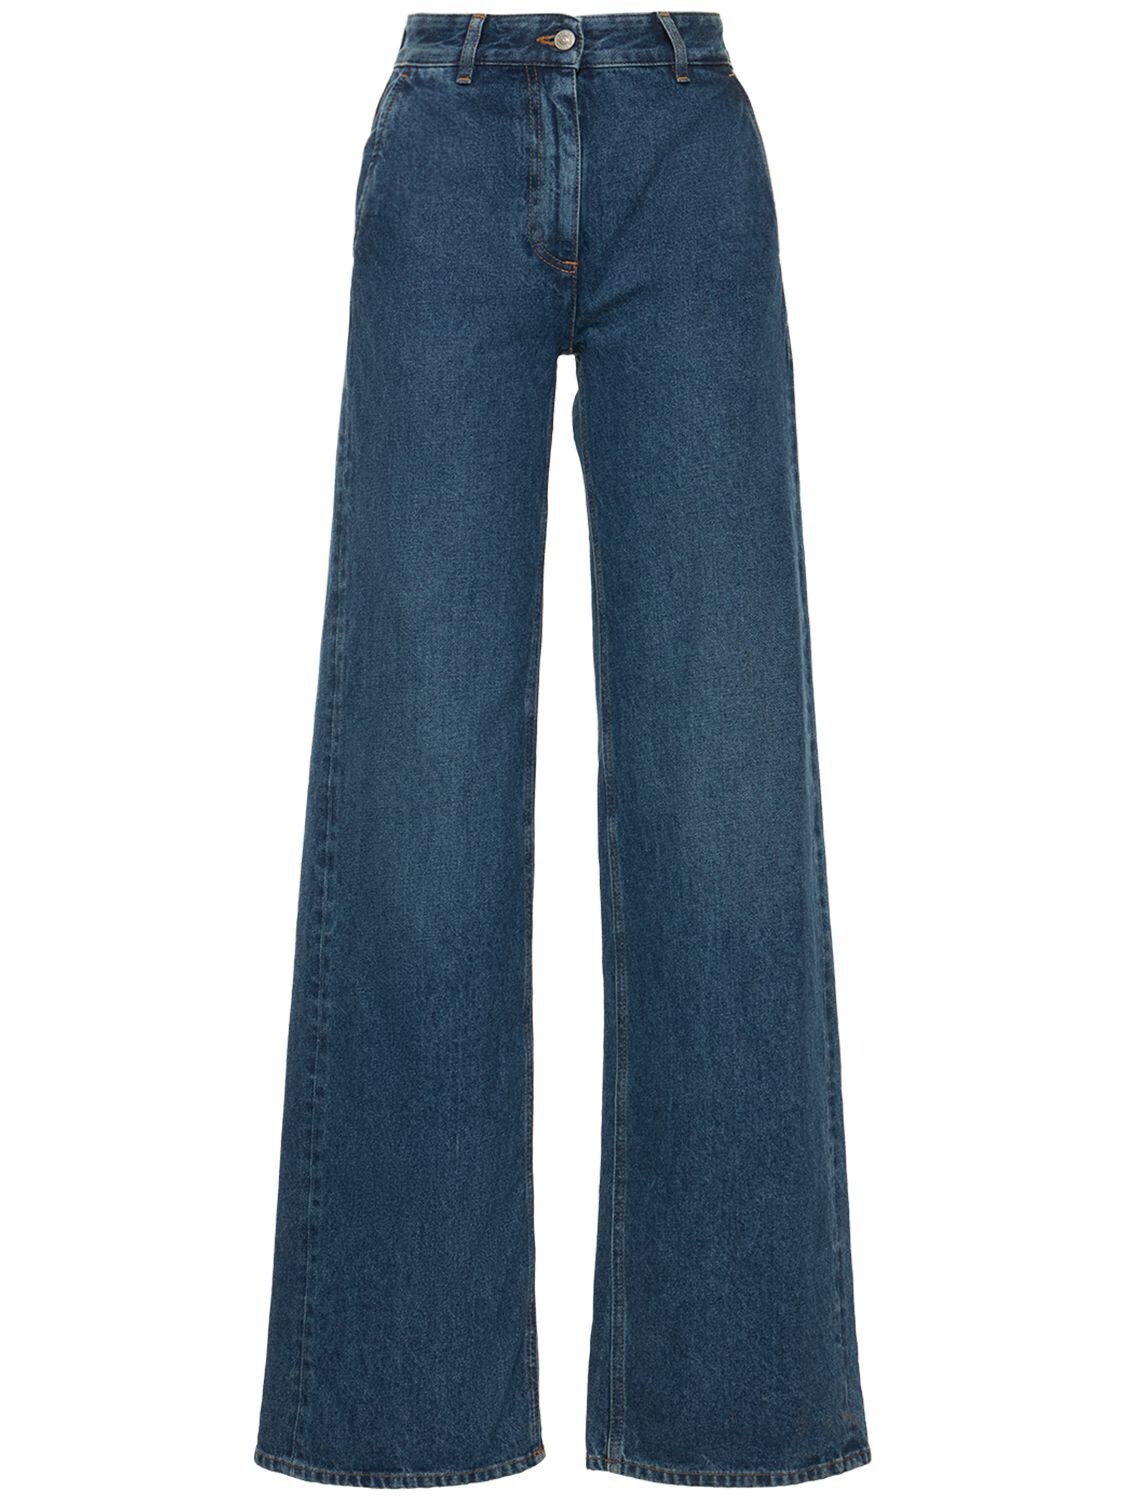 MM6 MAISON MARGIELA High Rise Straight Cotton Denim Jeans